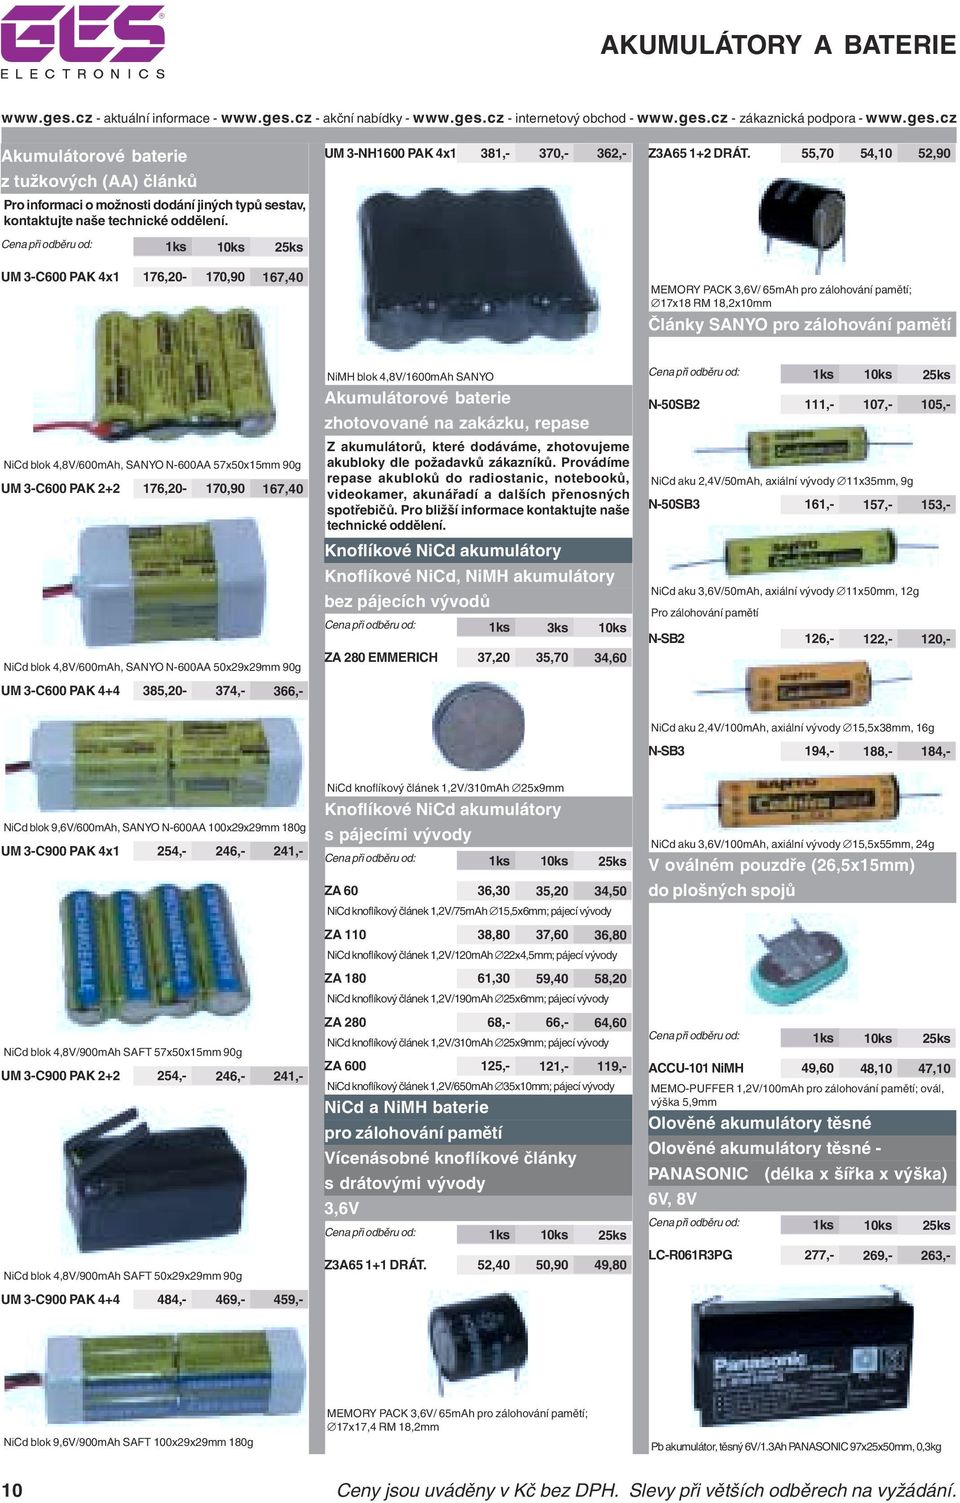 57x50x15mm 90g UM 3-C600 PAK 2+2 176,20-170,90 167,40 NiCd blok 4,8V/600mAh, SANYO N-600AA 50x29x29mm 90g UM 3-C600 PAK 4+4 385,20-374,- 366,- NiMH blok 4,8V/1600mAh SANYO Akumulátorové baterie